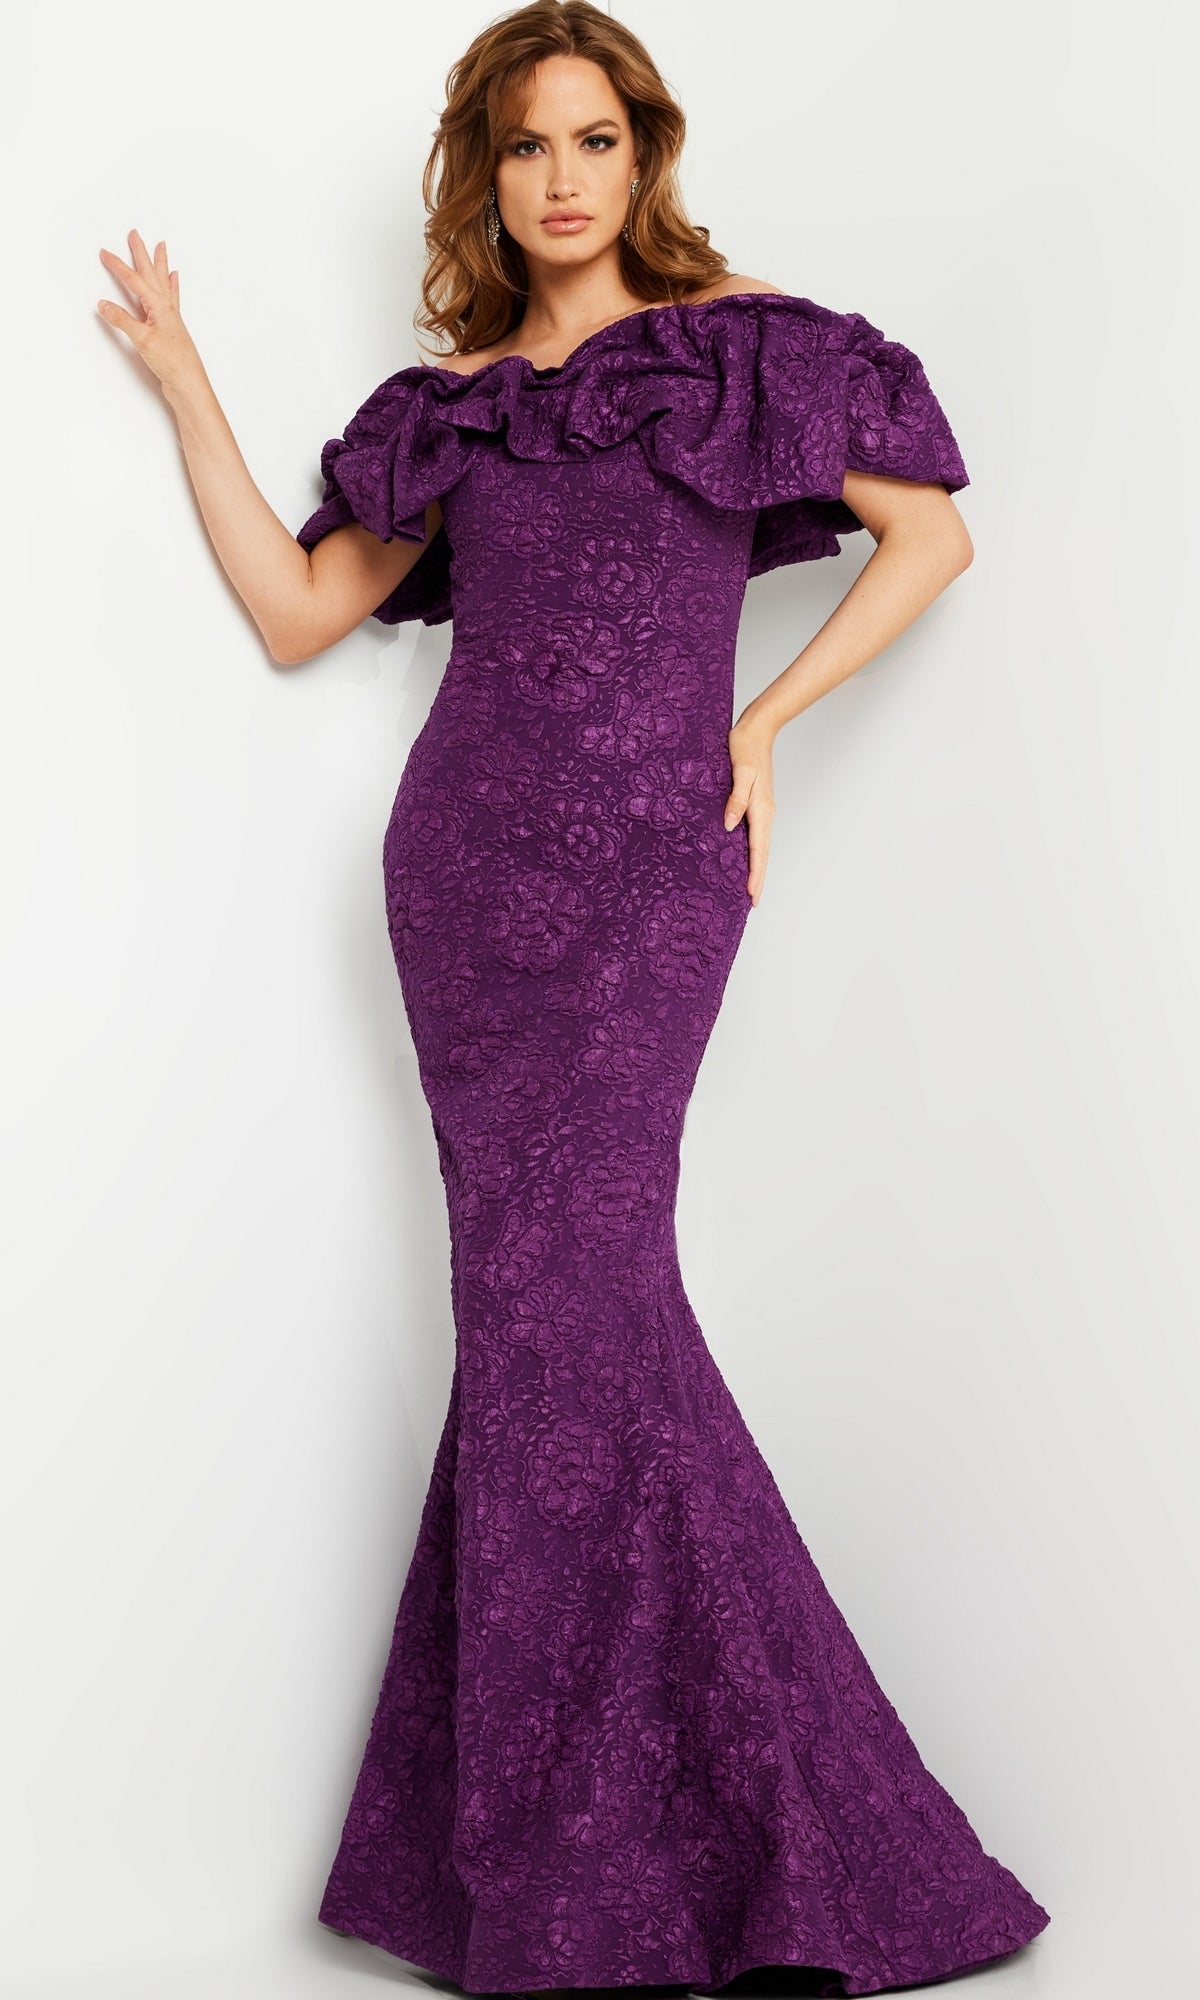 Jovani Long Brocade Mermaid Prom Dress 23847